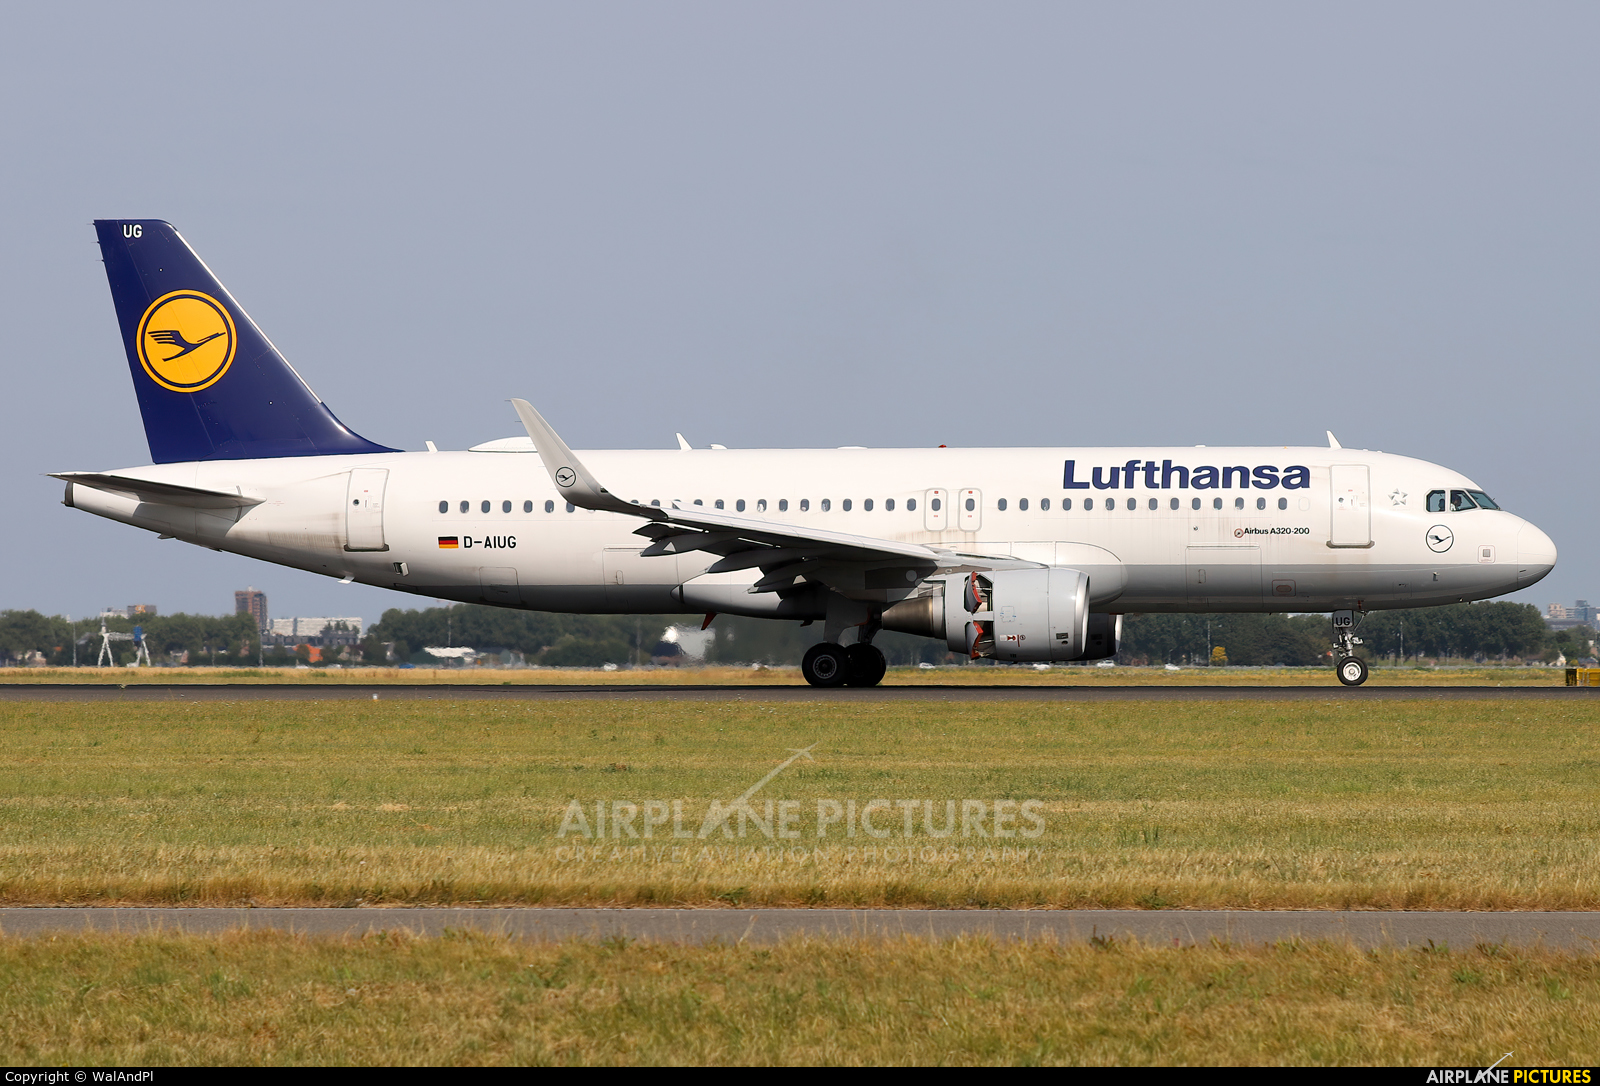 Lufthansa D-AIUG aircraft at Amsterdam - Schiphol